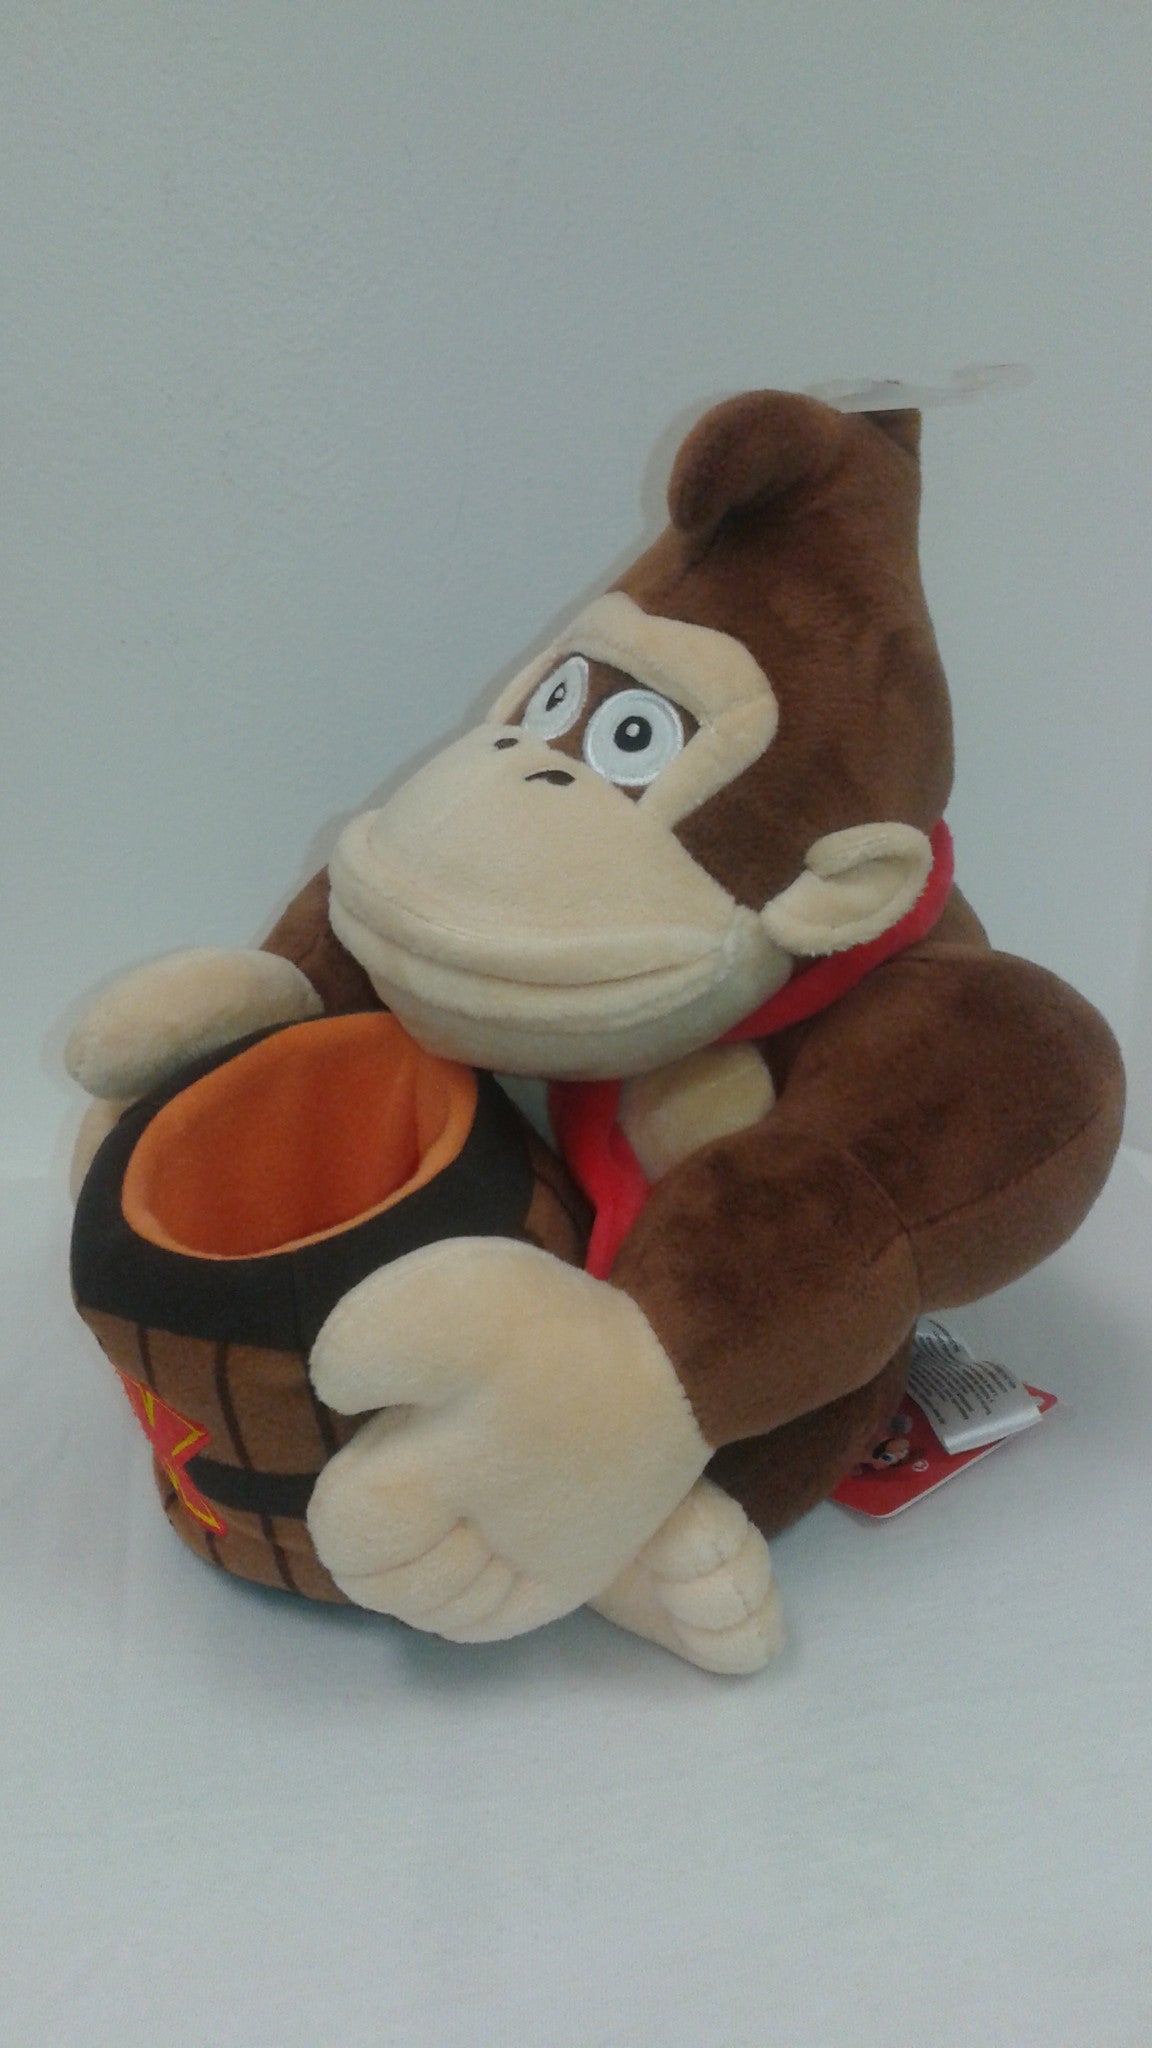 Super Mario Bros.: Donkey Kong with Barrel 9" Plush